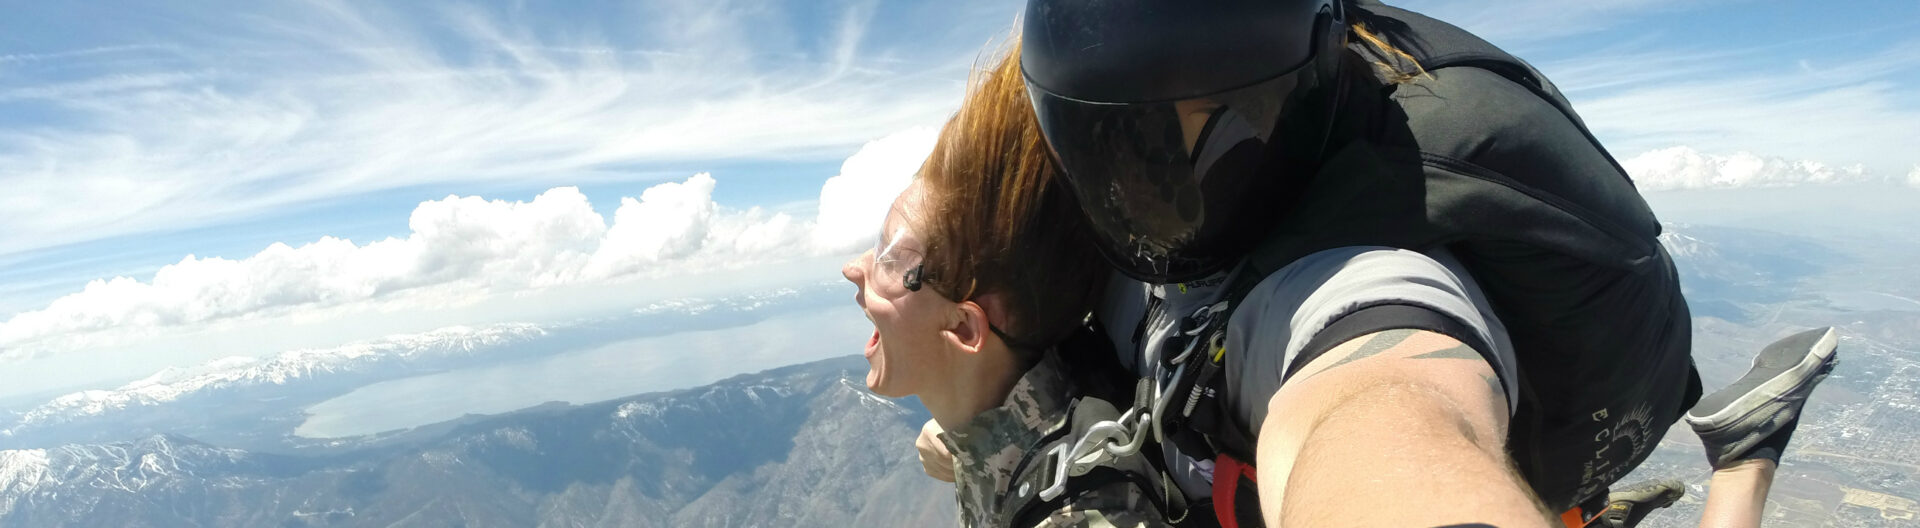 Tandem Skydiving Experience Skydive Reno, NV Skydive Lake Tahoe